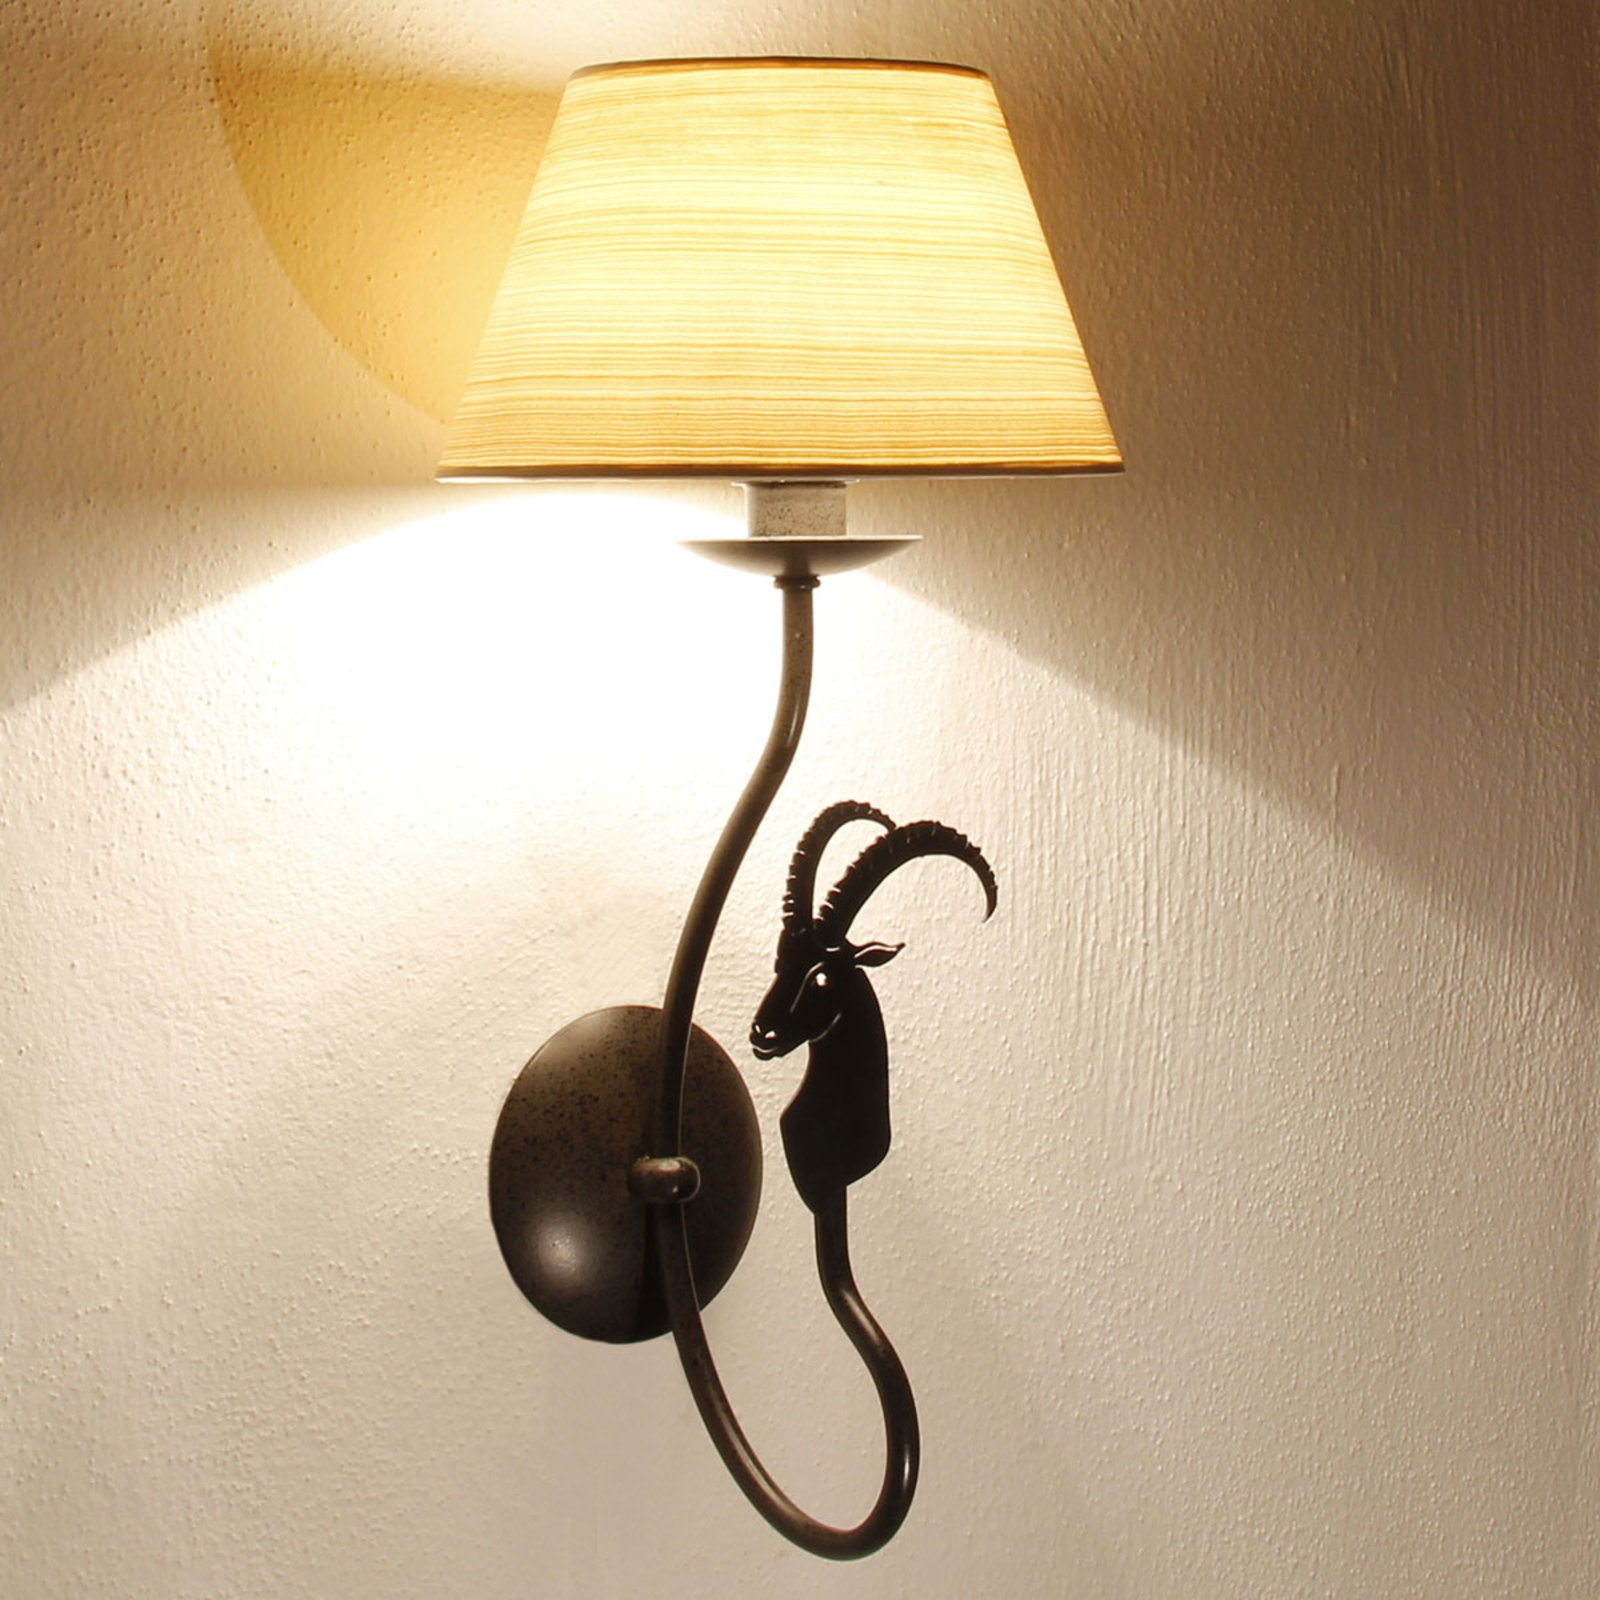 Menzel TH7361 wall light, 1-bulb, ibex